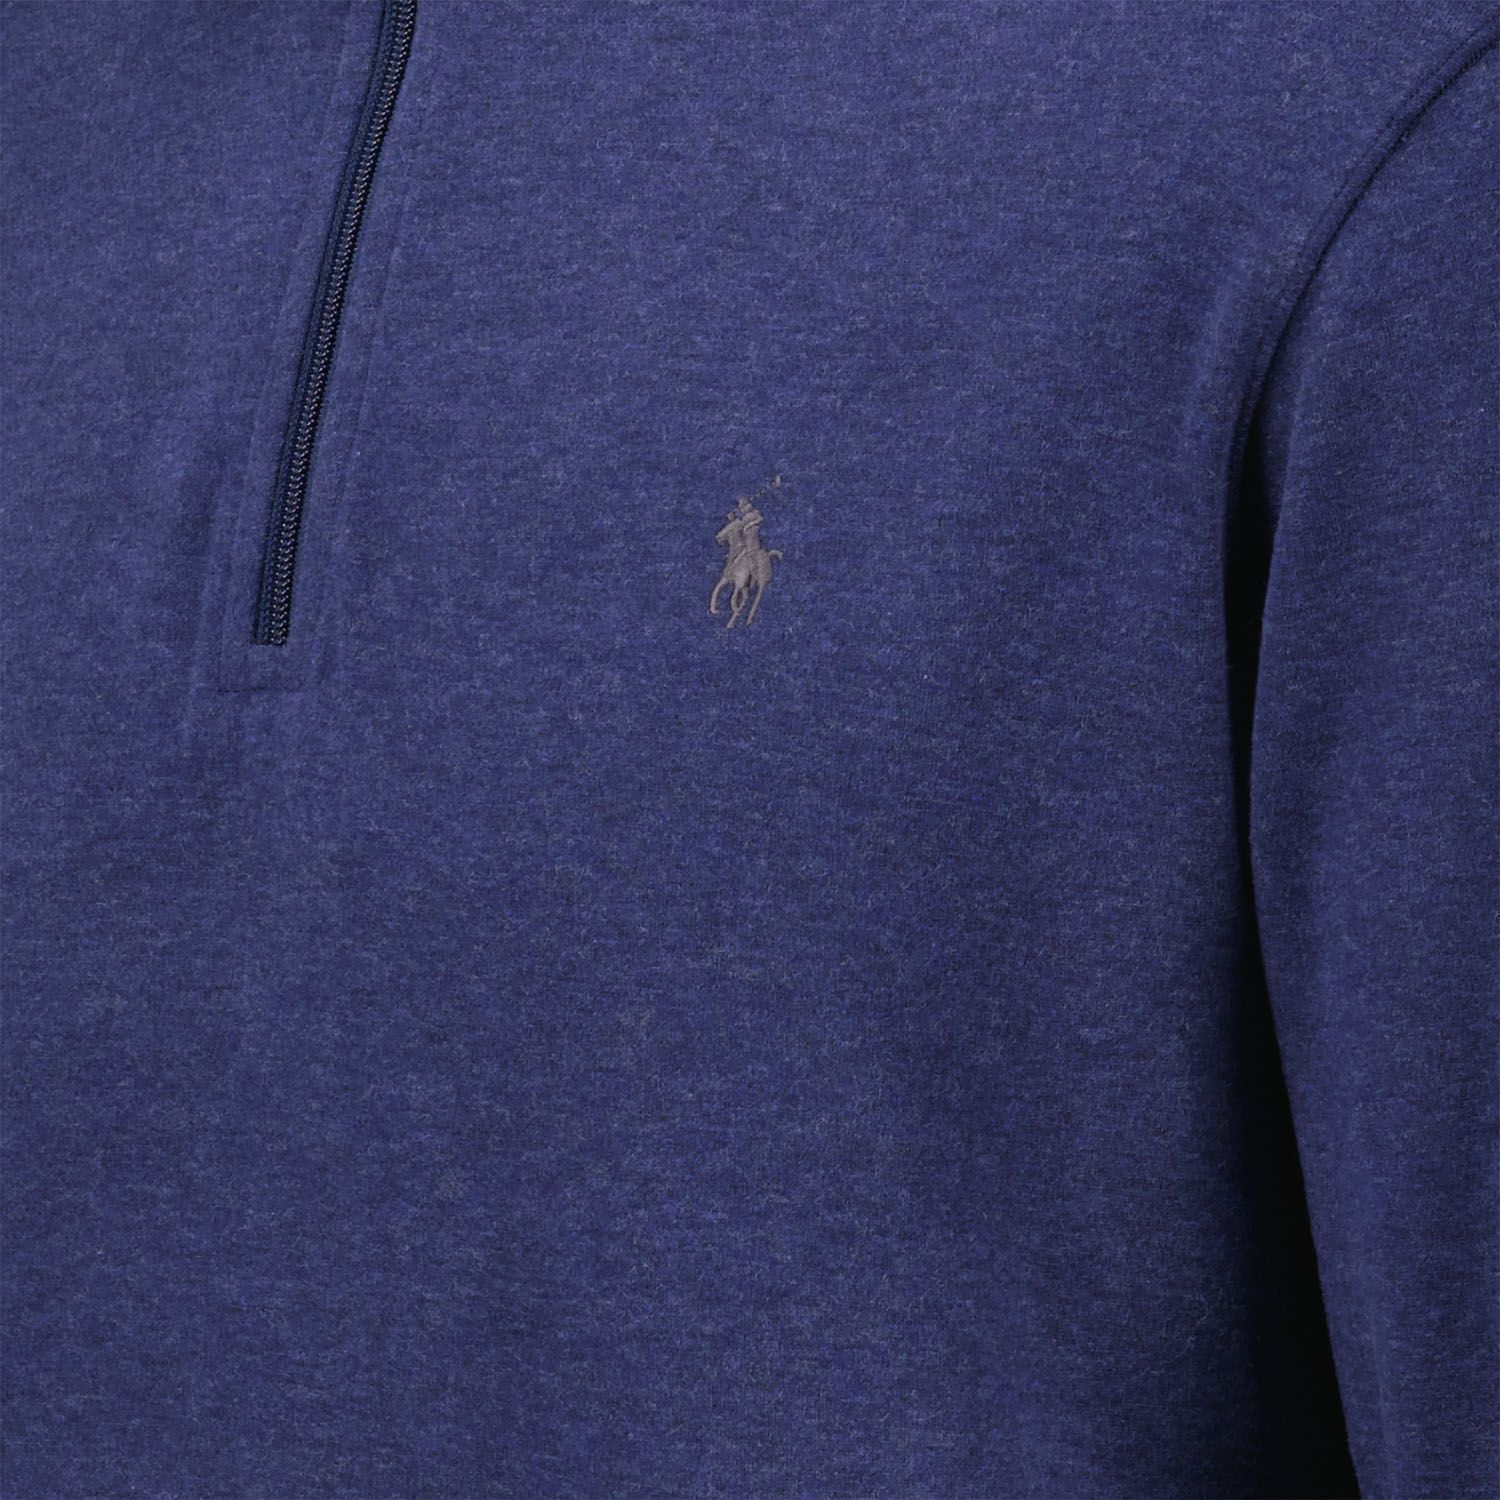 Polo Ralph Lauren Sweater Blauw